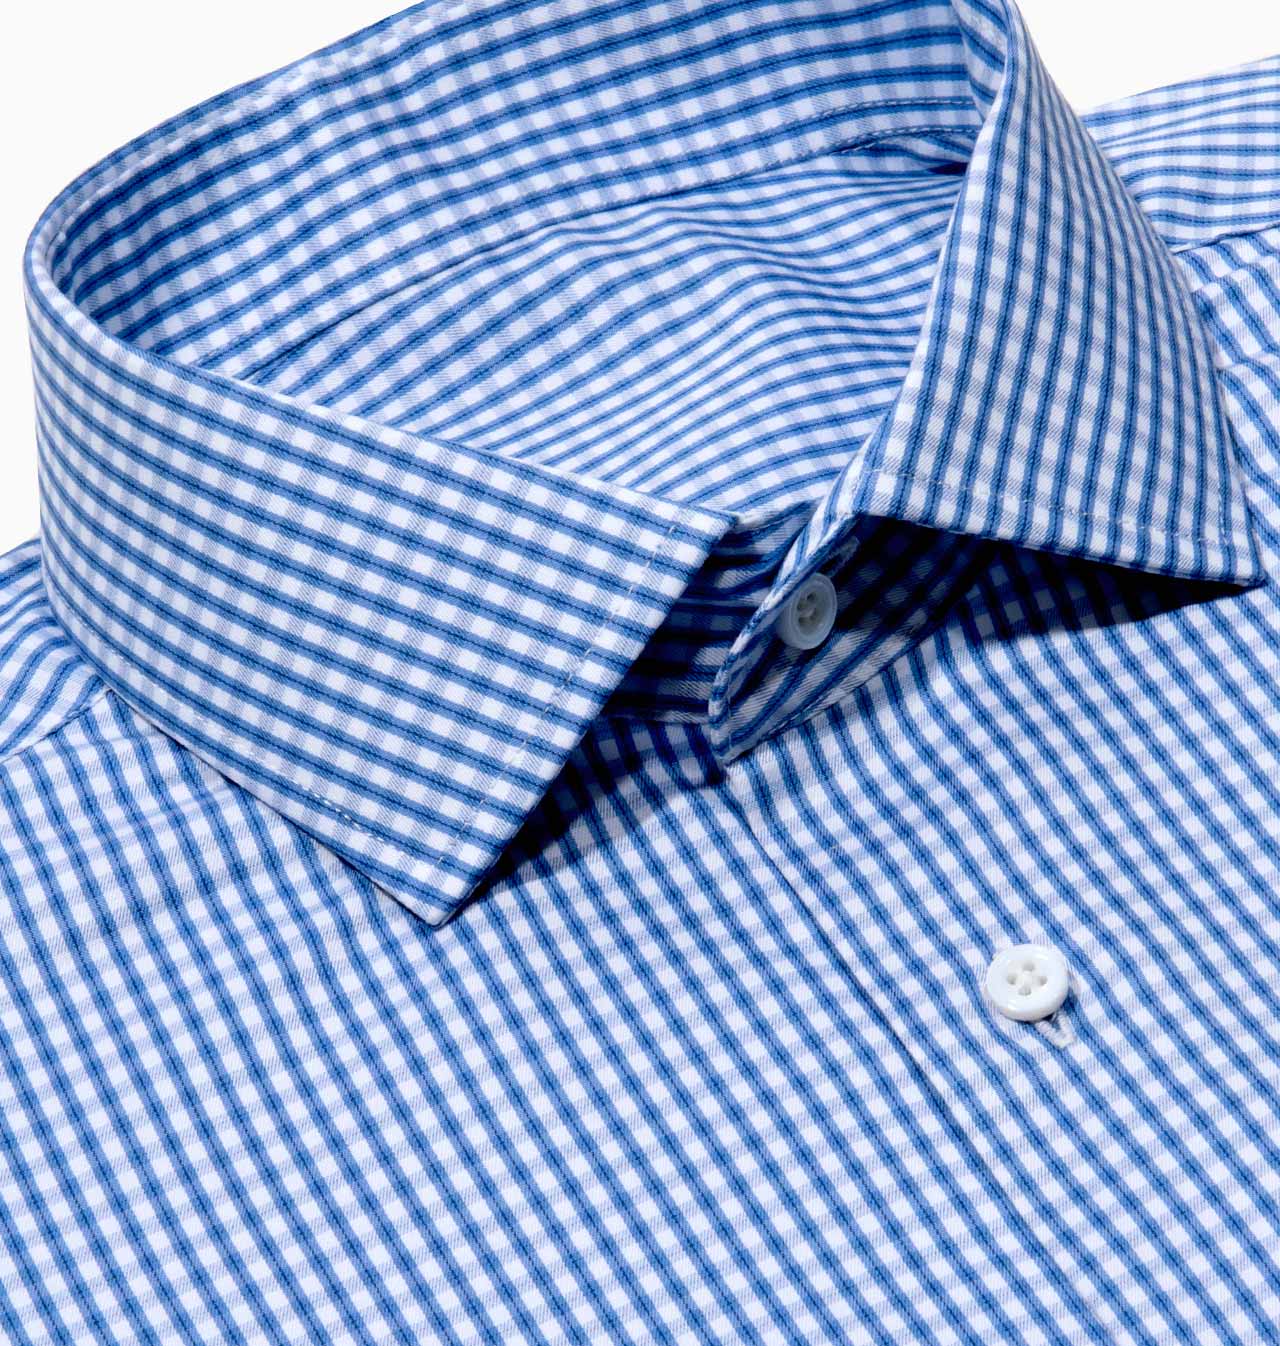 Shirts › Transitional › Blue Striped Check / 1659 Standard